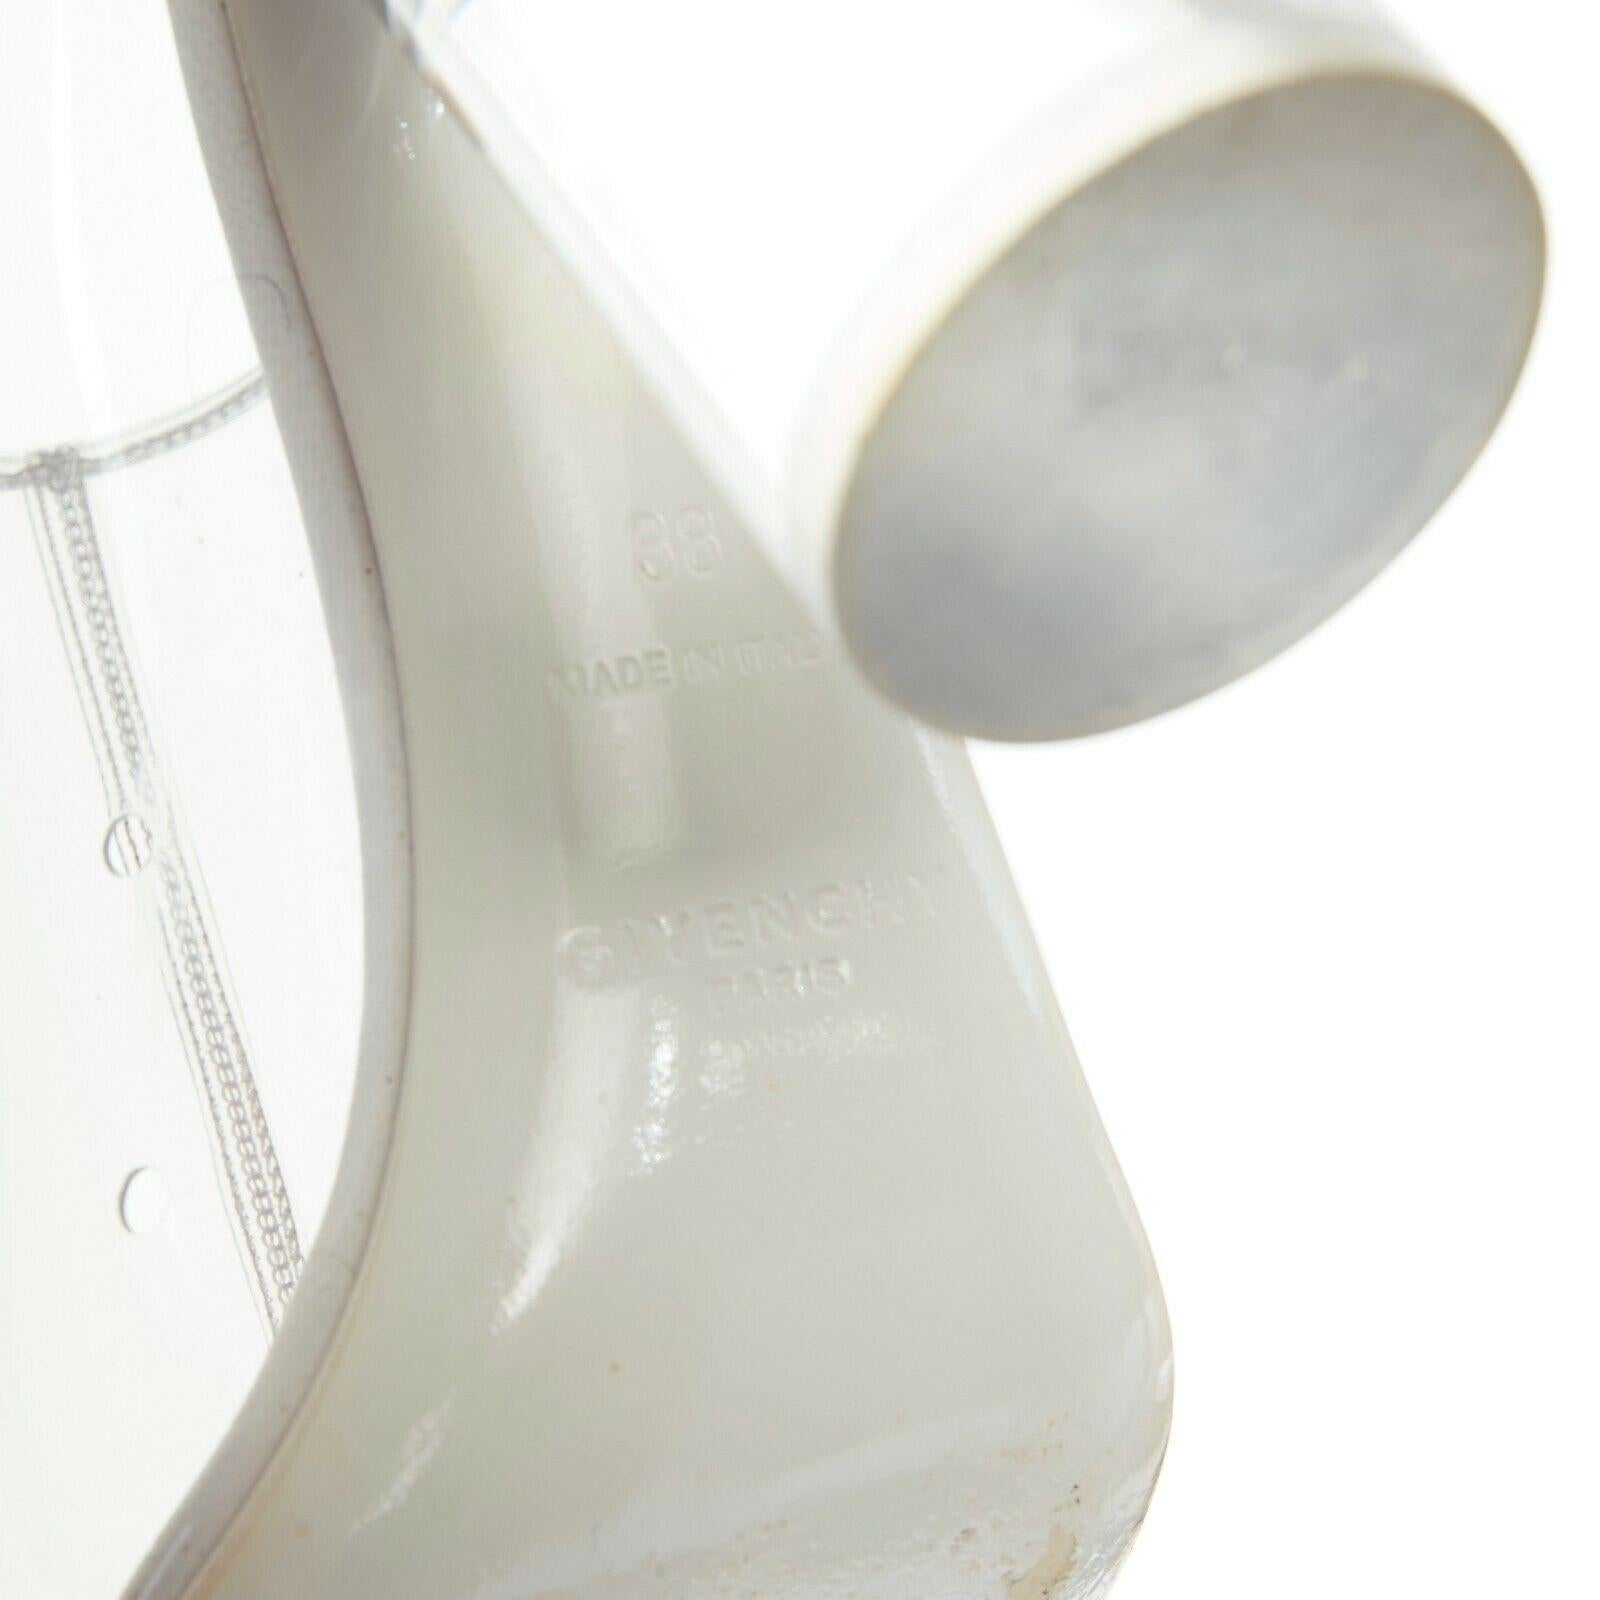 GIVENCHY TISCI white clear PVC perspex cylindrical heel peep toe mule heels EU38 2